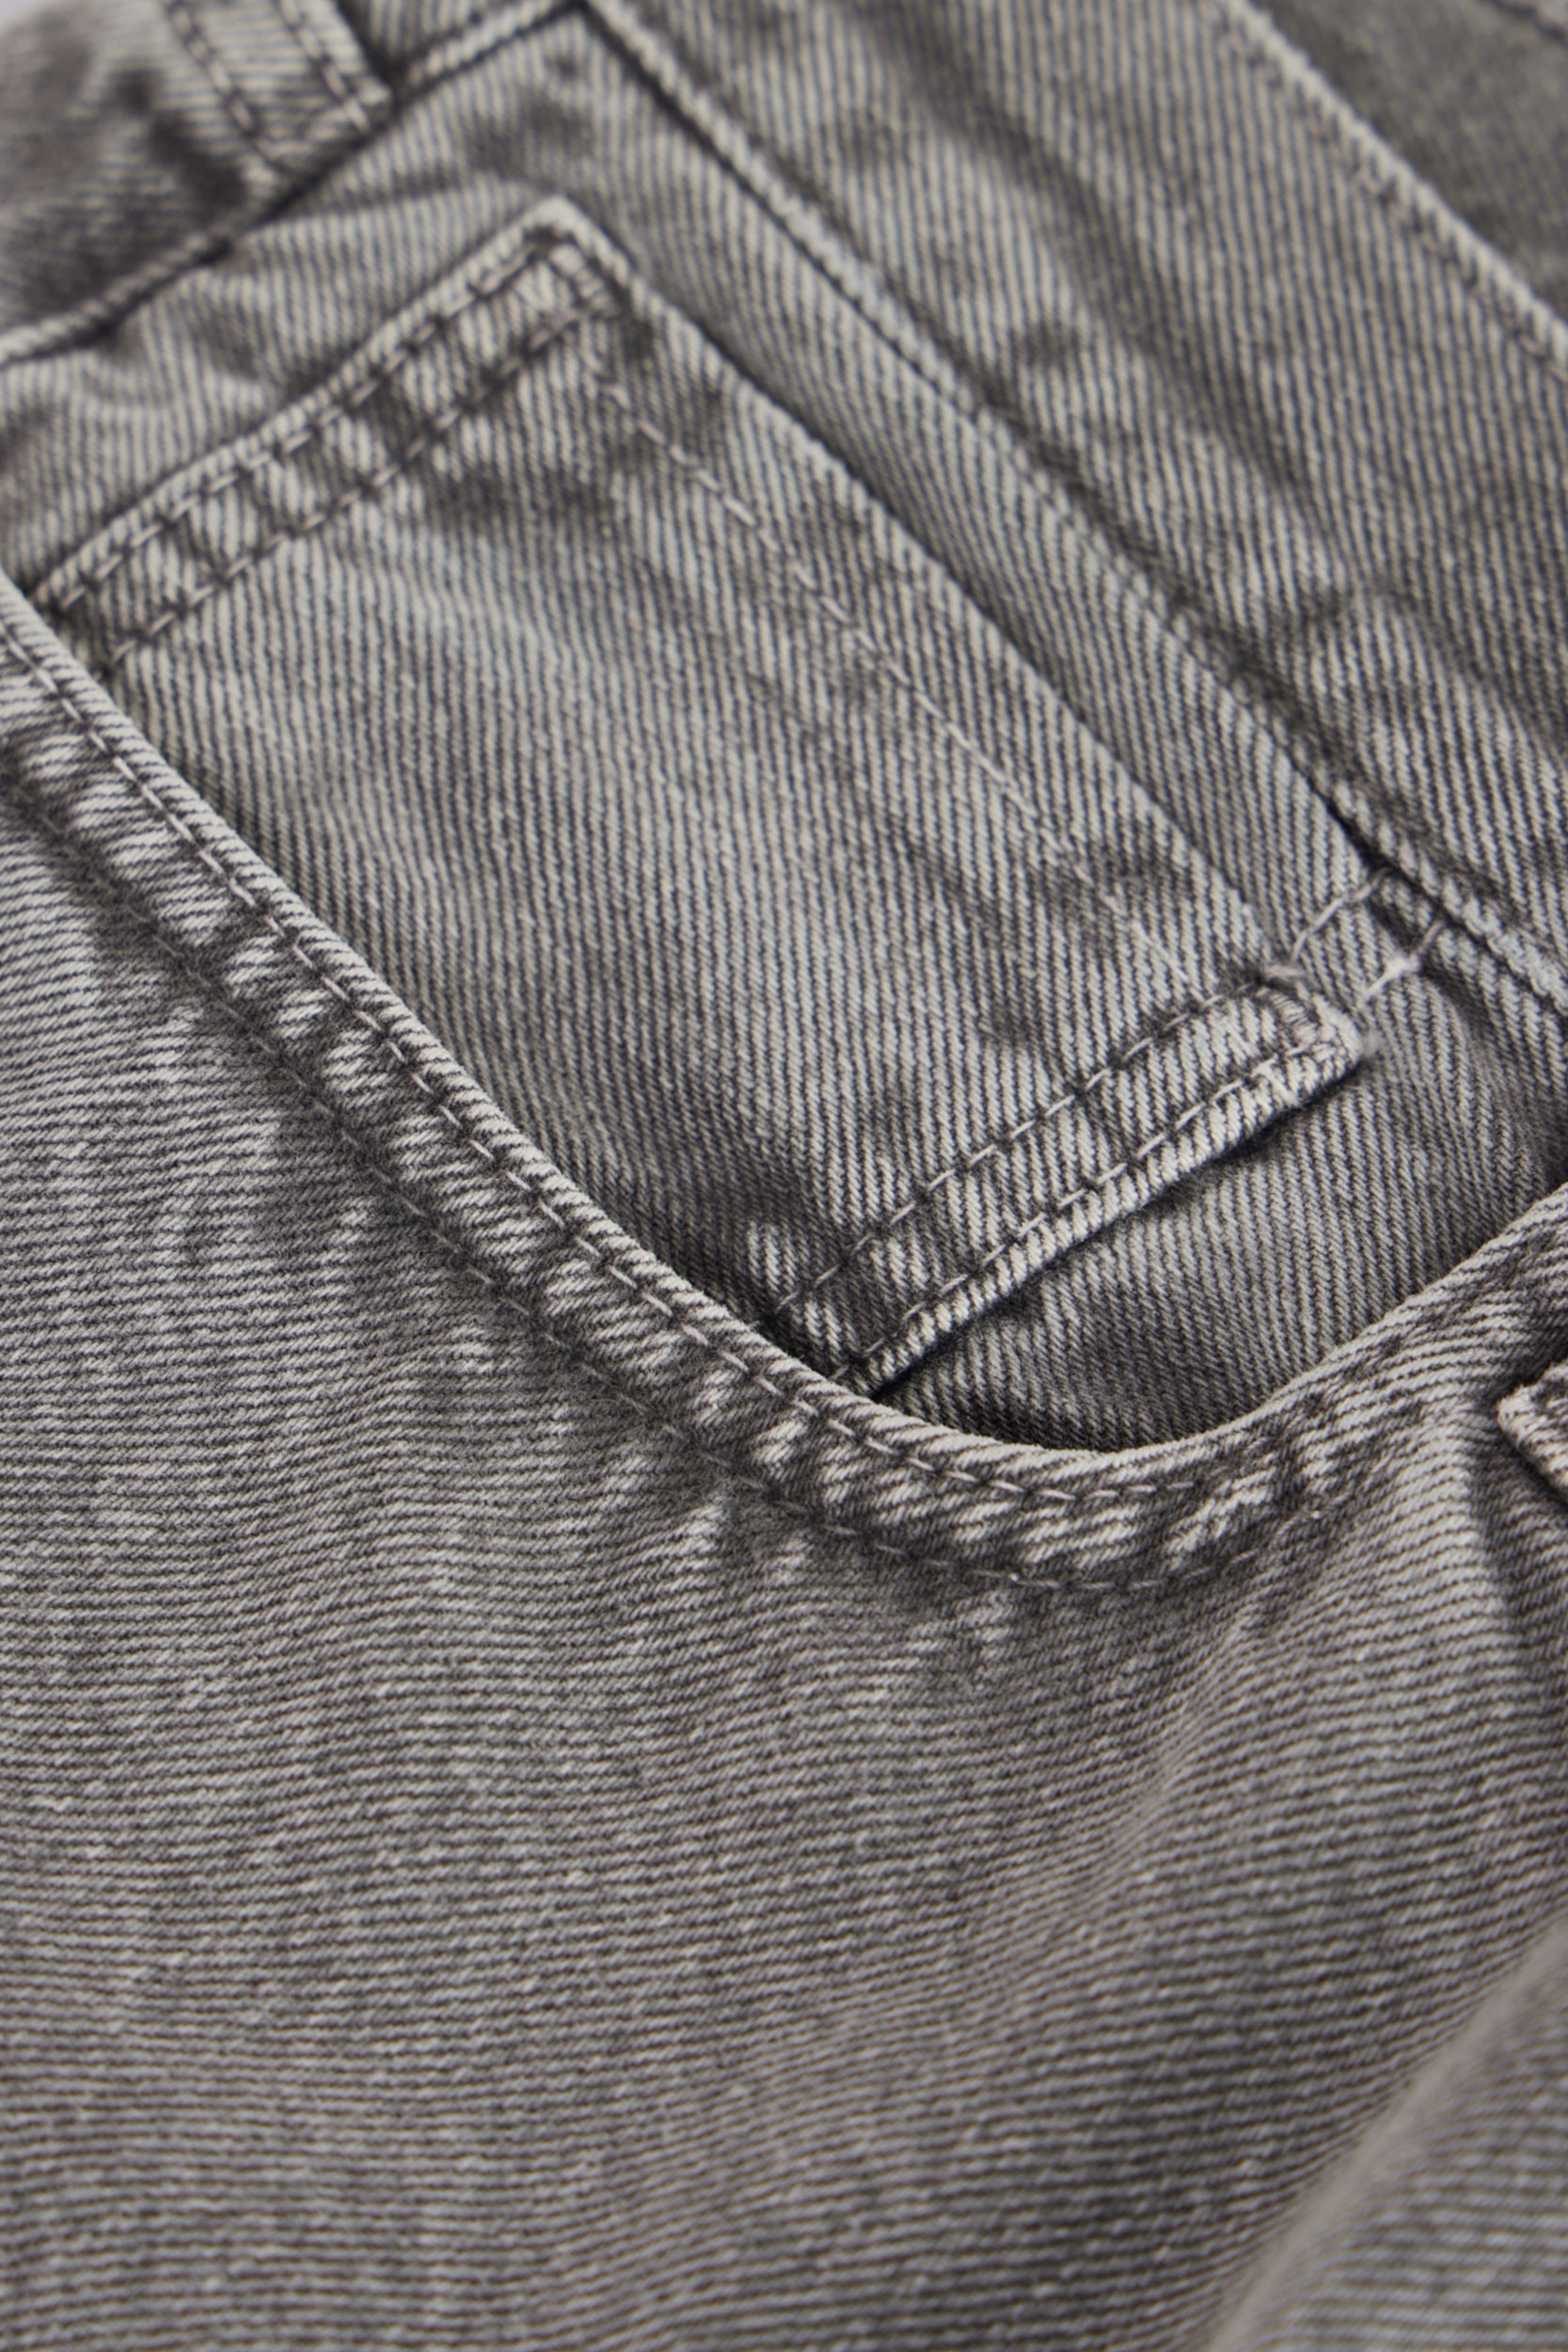 Bandito Grey Slim Fit Selvedge Jeans - Barbanera